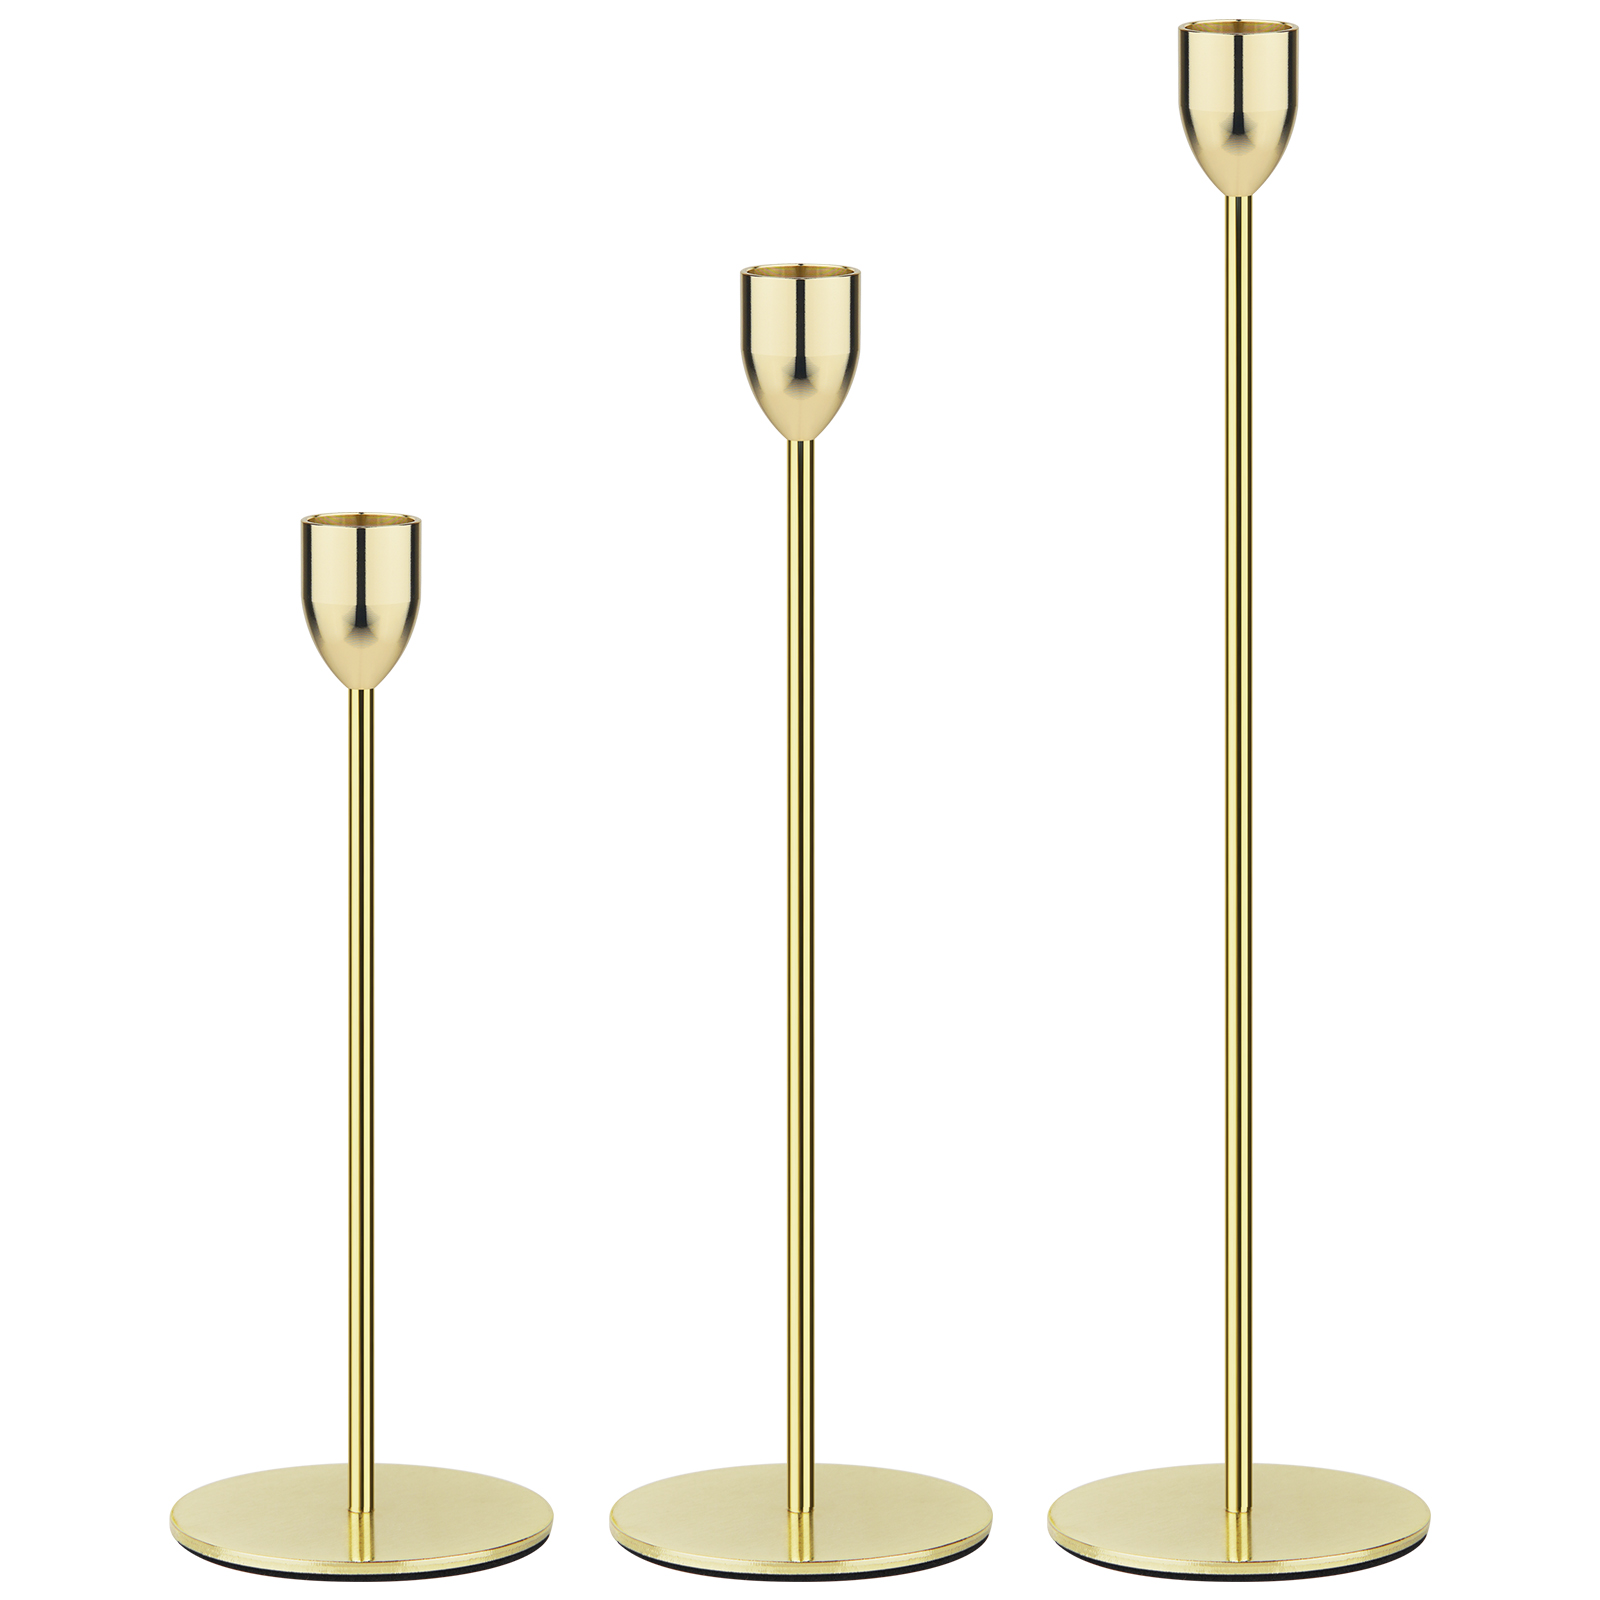 Ohtomber Matal Gold Candle Holder - 3PCS Candlestick Holders, Candle Sticks Holder Decor for Pillar 